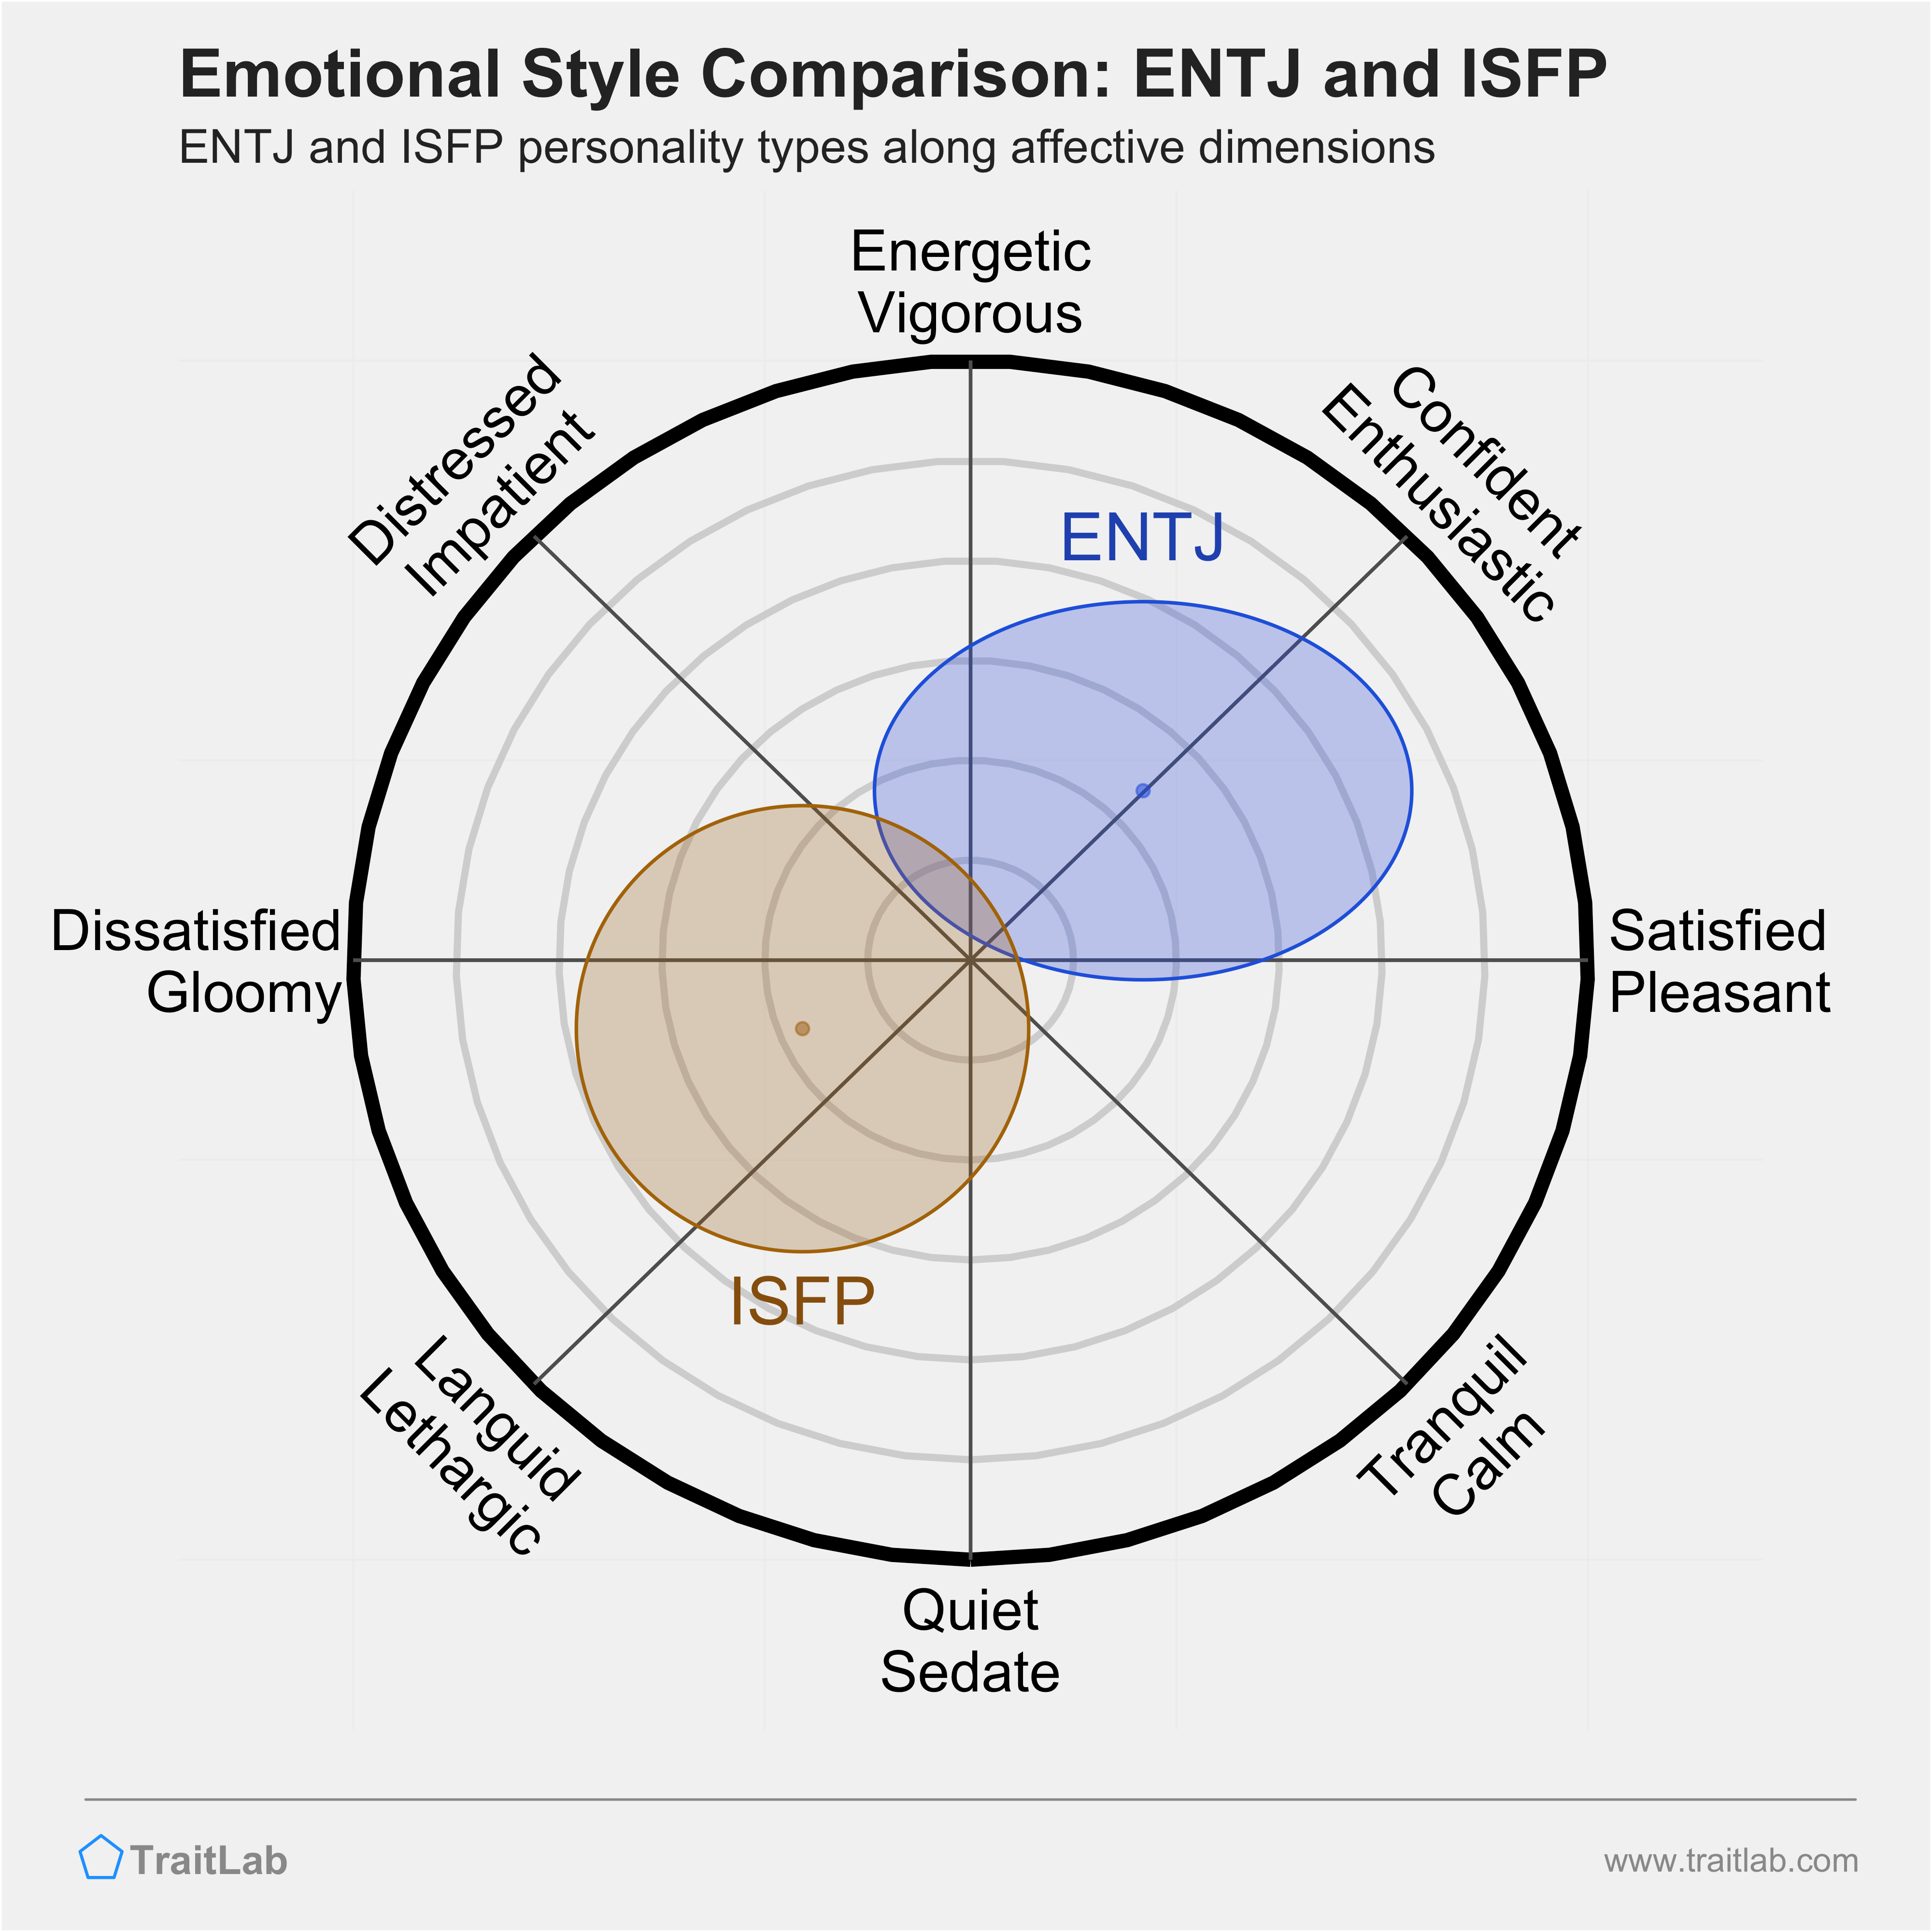 ENTJ and ISFP comparison across emotional (affective) dimensions